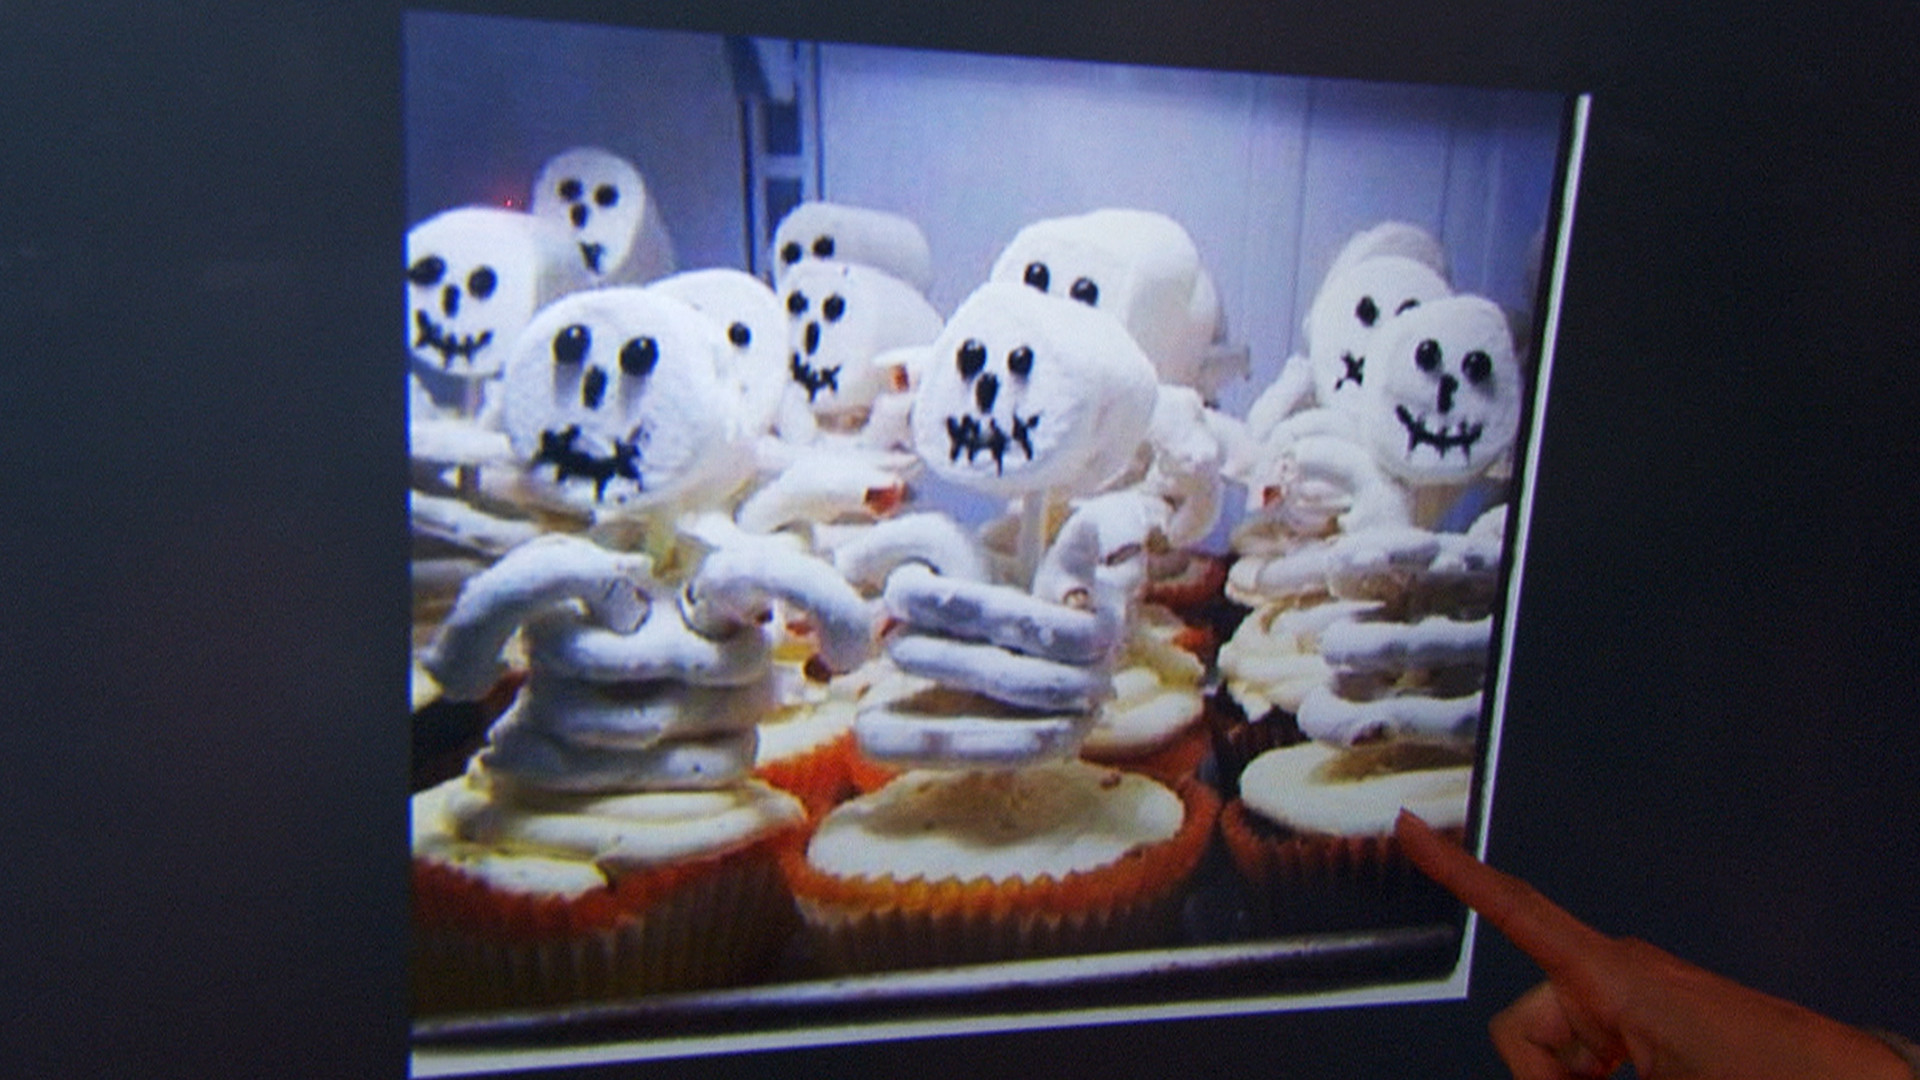 Creative Halloween Desserts
 Skeleton cupcakes mummy cookies Your creative Halloween